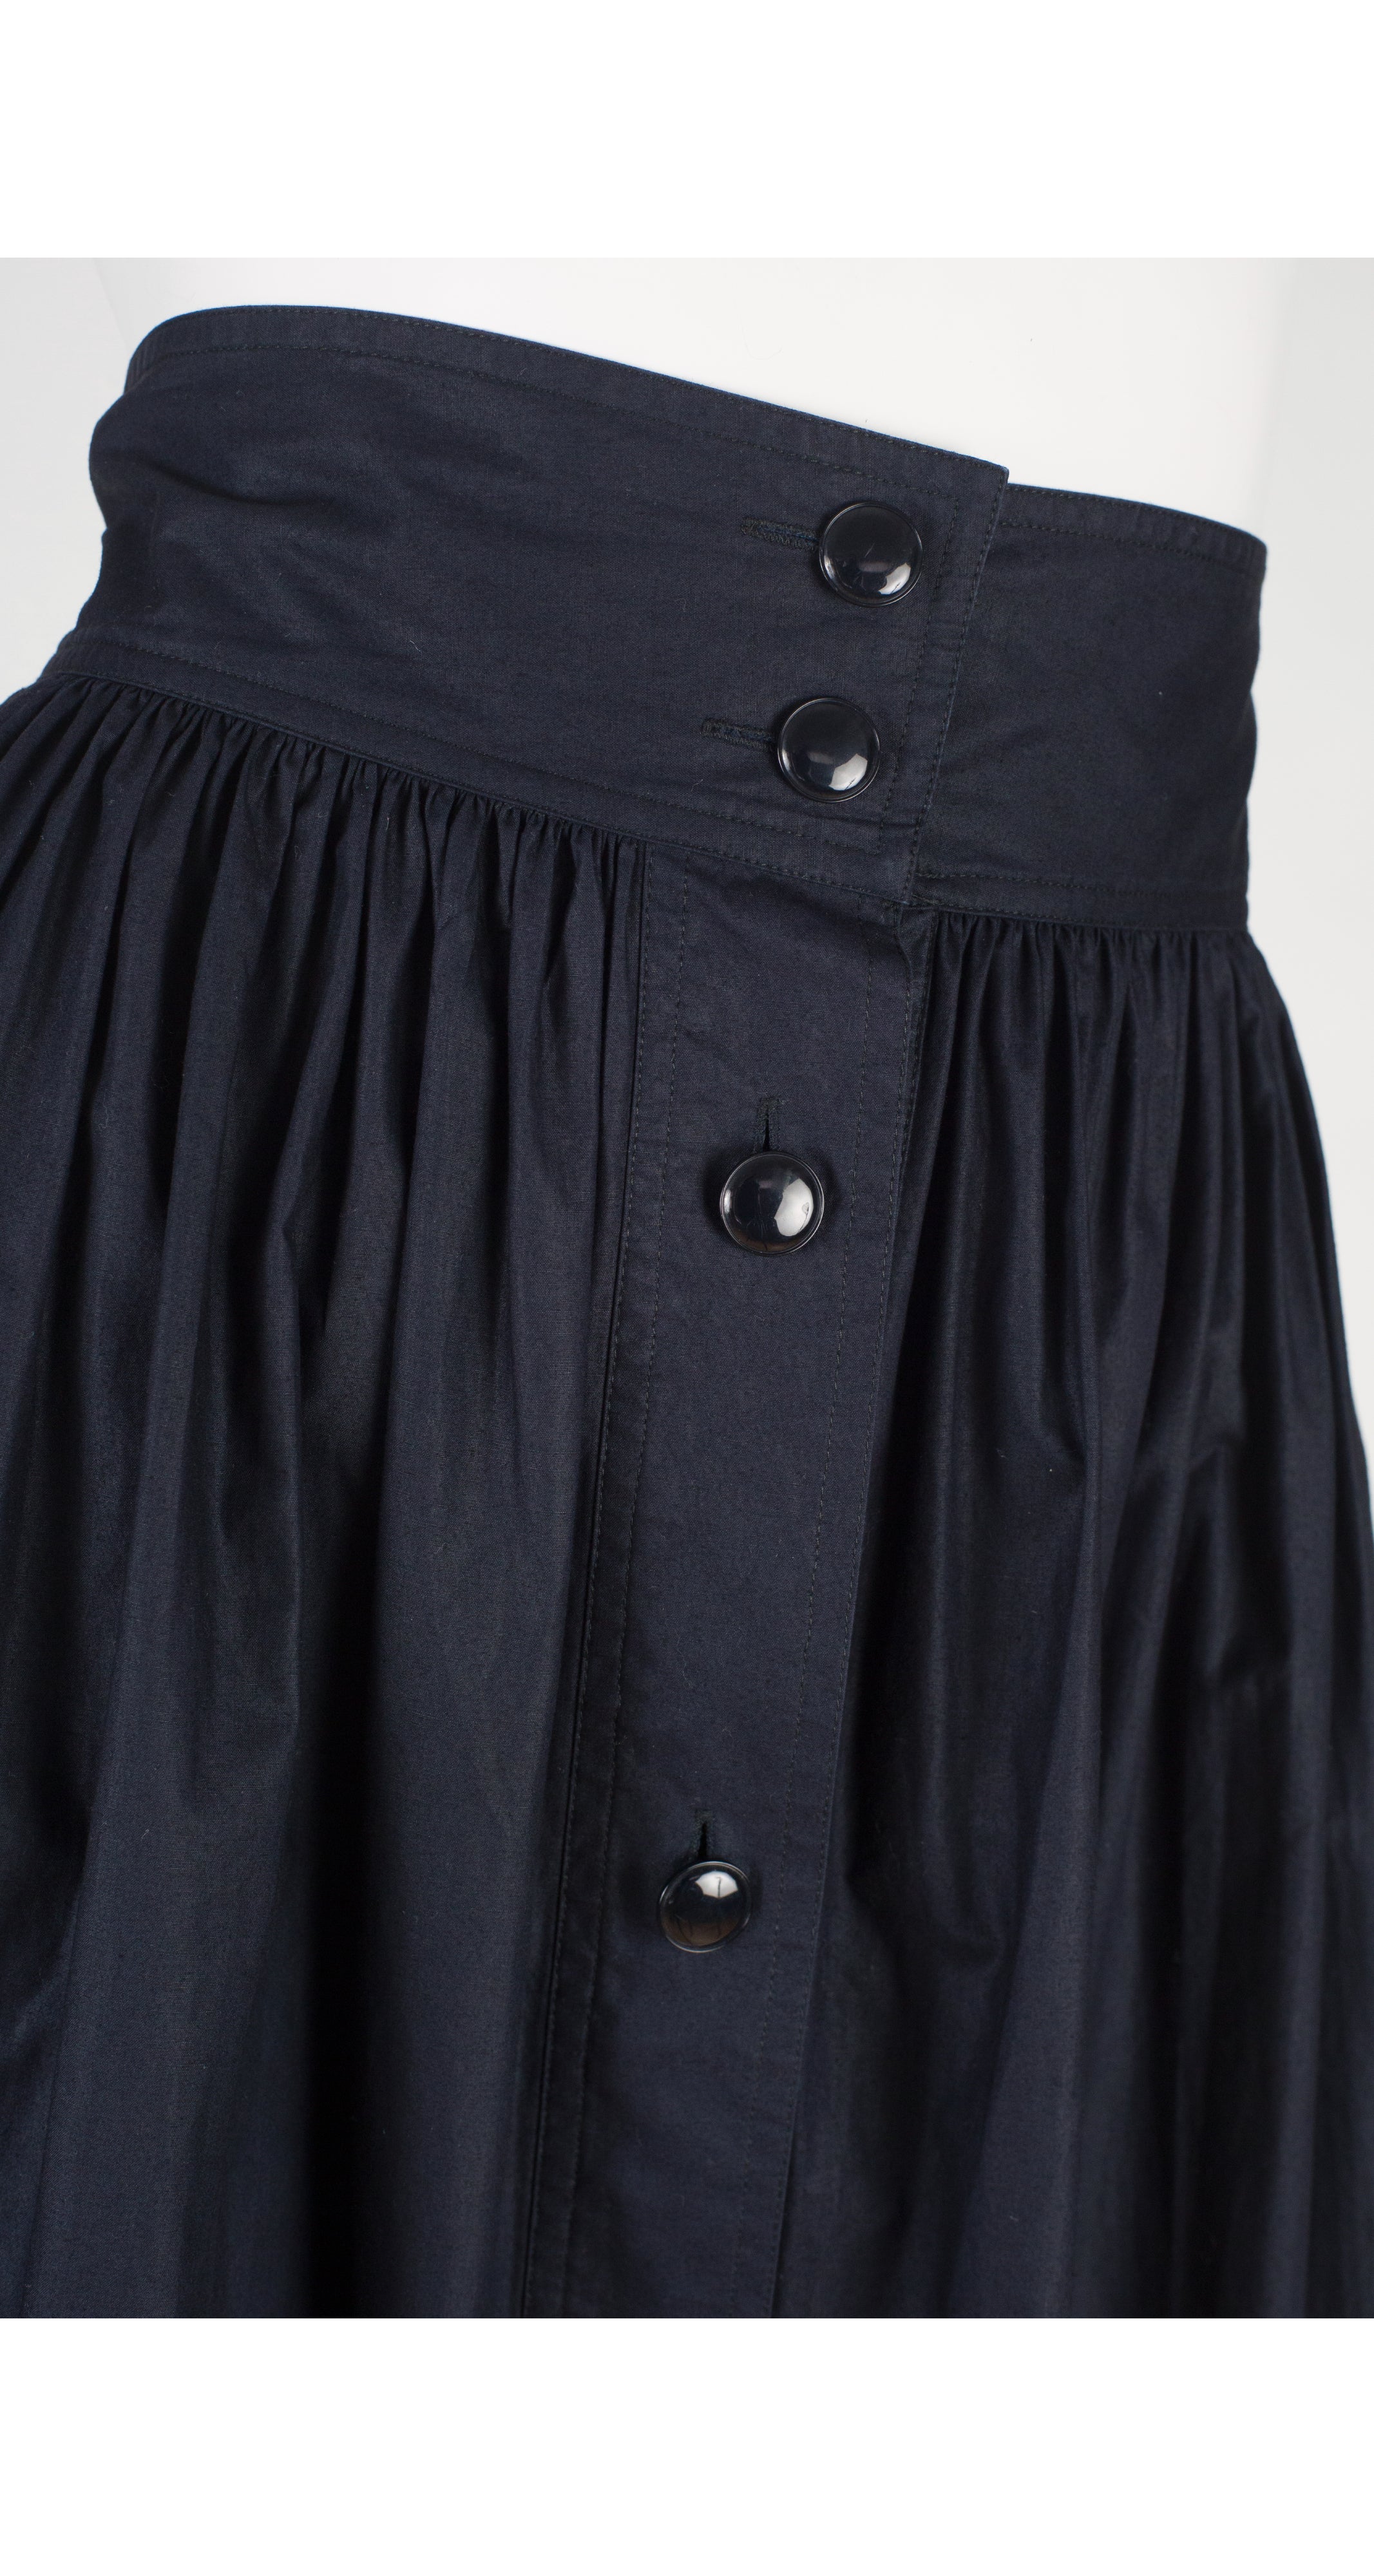 1980s Navy Cotton High-Waisted Midi Skirt